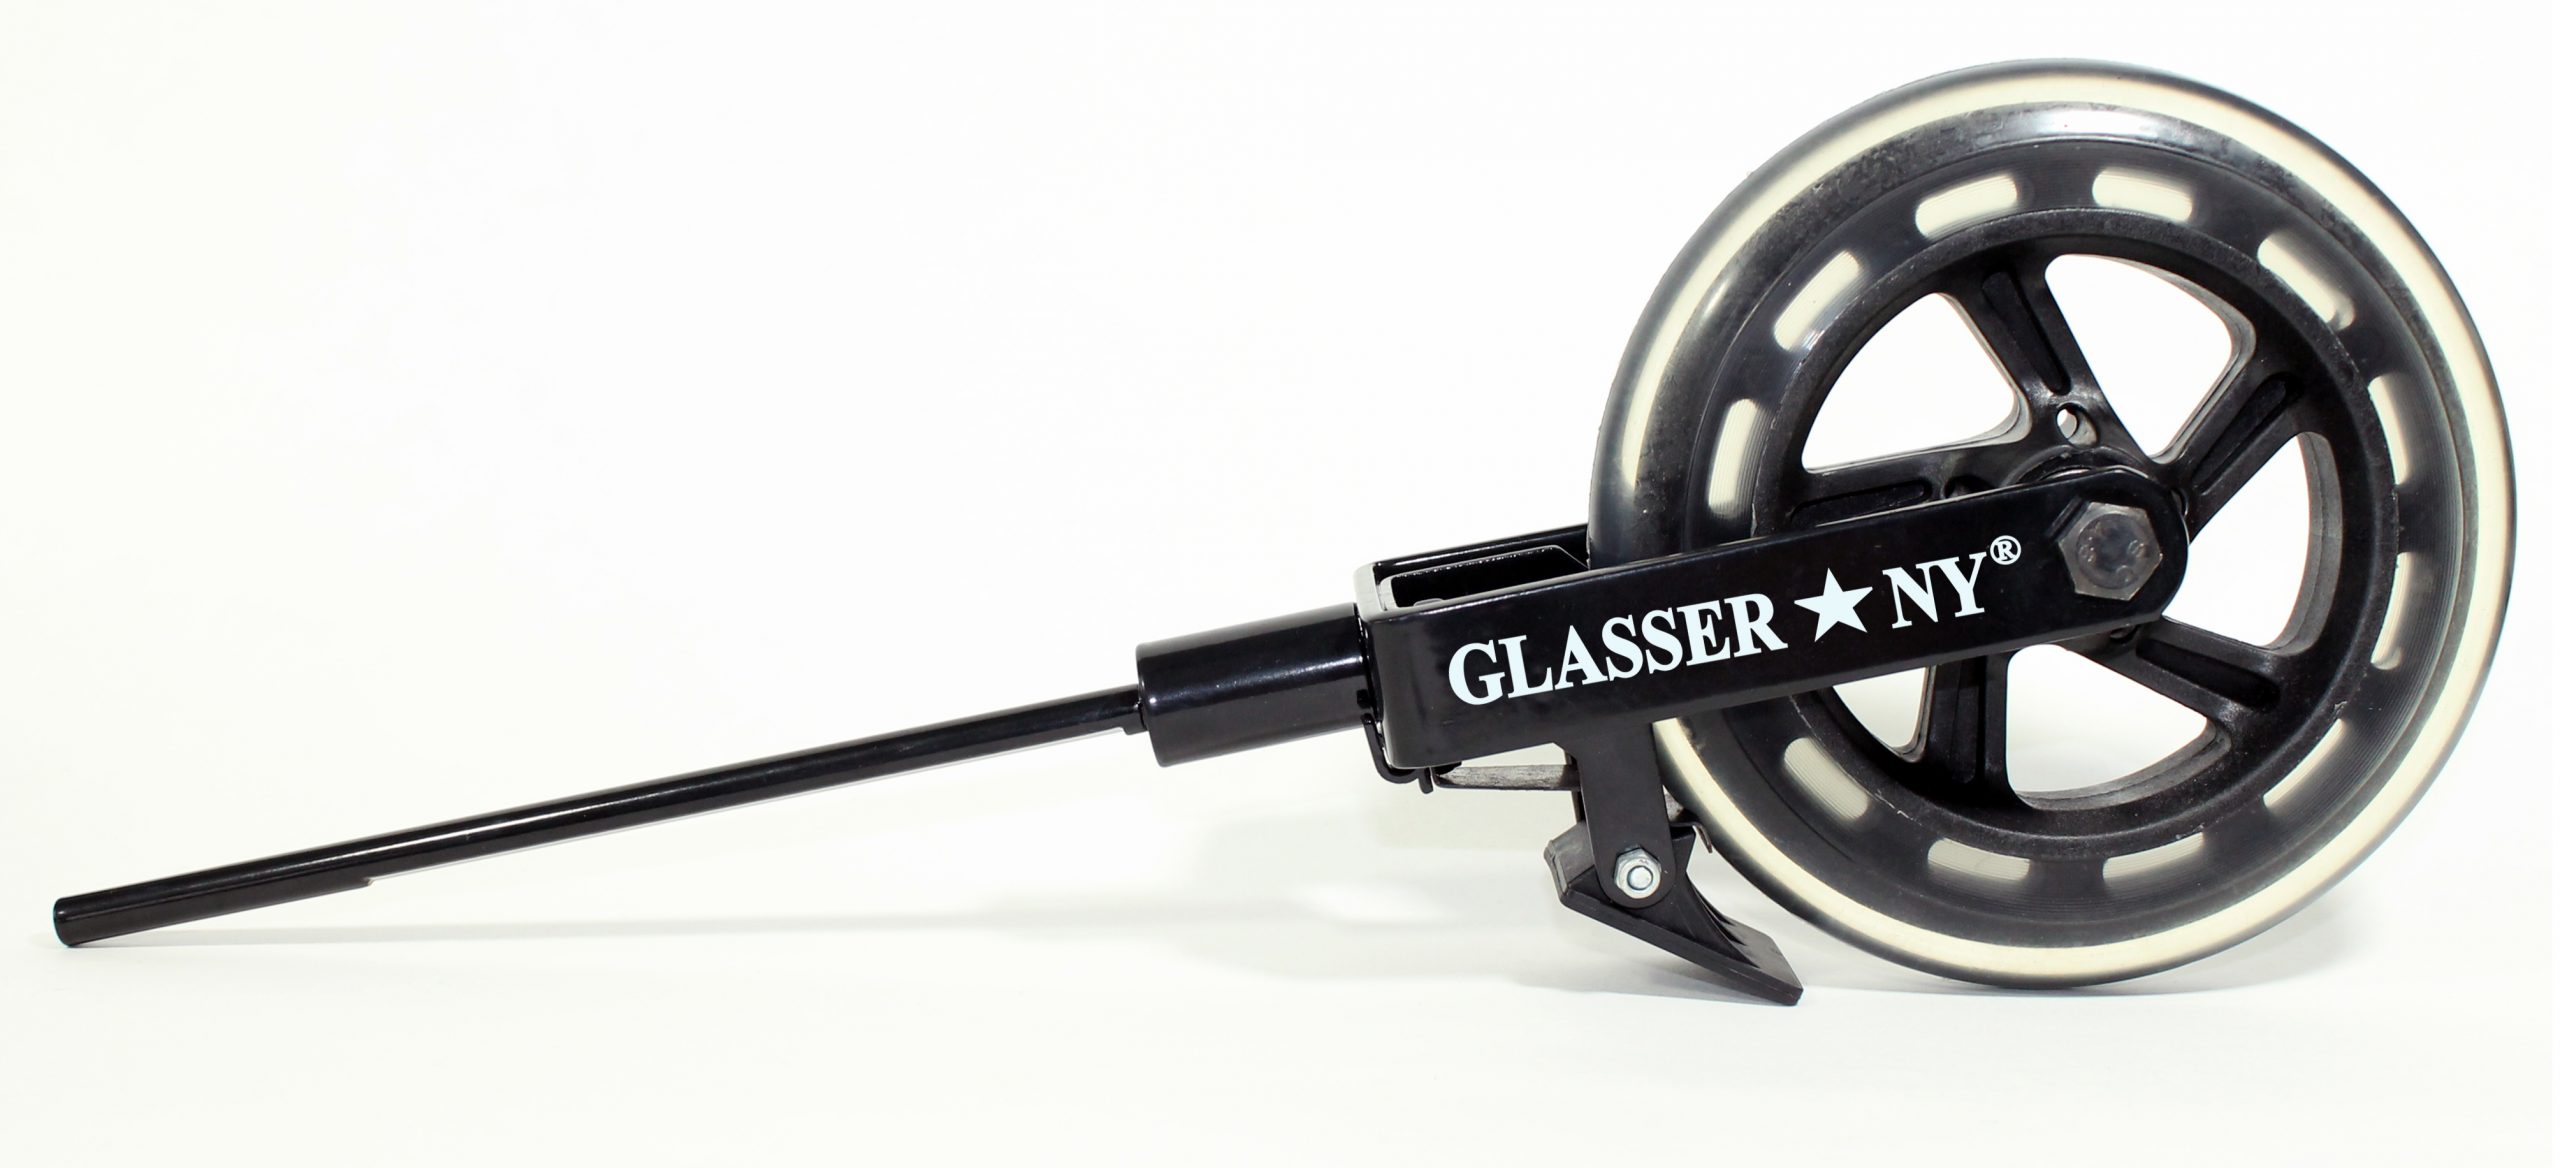 Bass Wheel 8 mm with brake